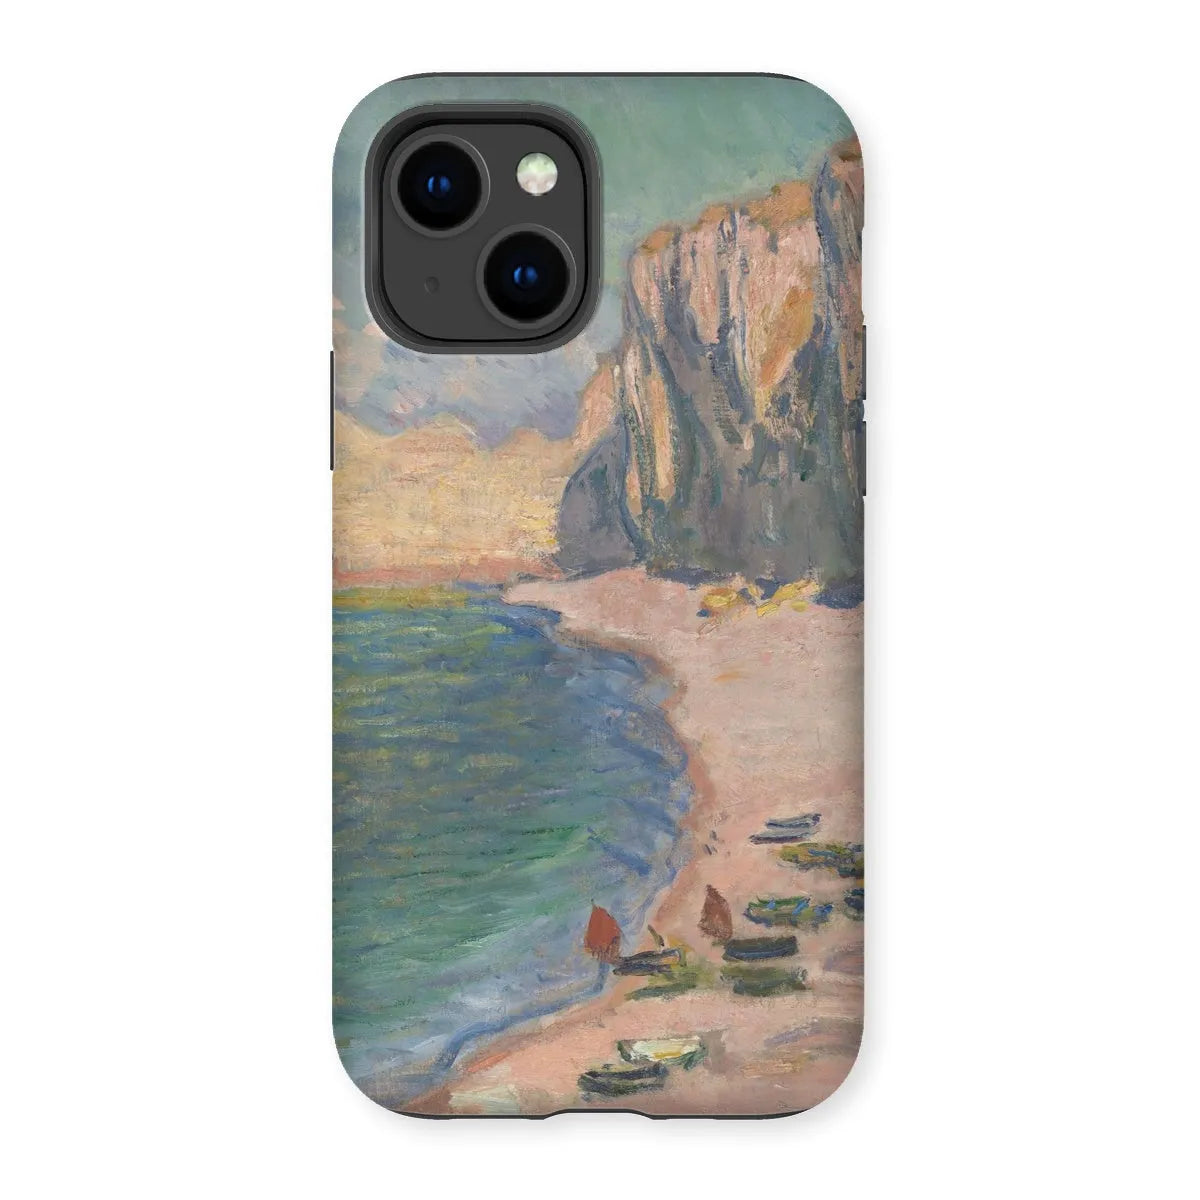 étretat - Impressionist Art Phone Case - Claude Monet - Iphone 14 / Matte - Mobile Phone Cases - Aesthetic Art